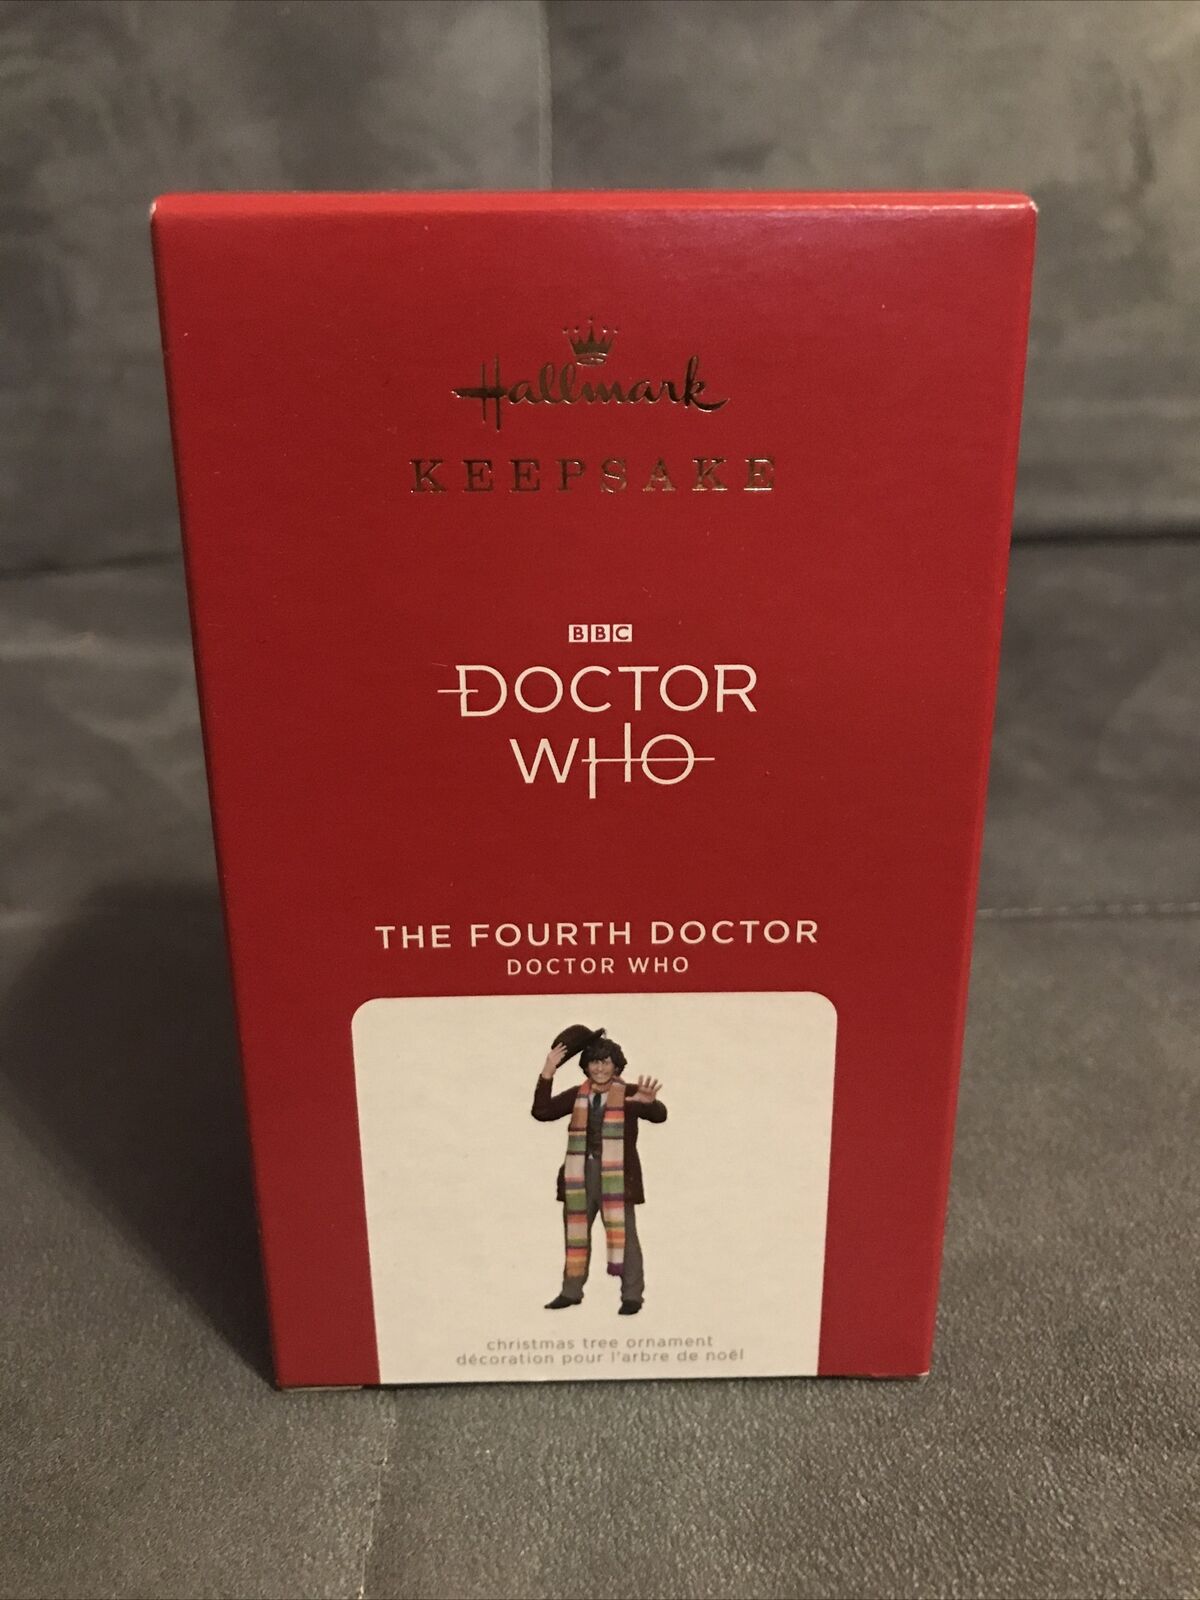 2021 Hallmark Keepsake Doctor Who The Fourth Doctor Ornament